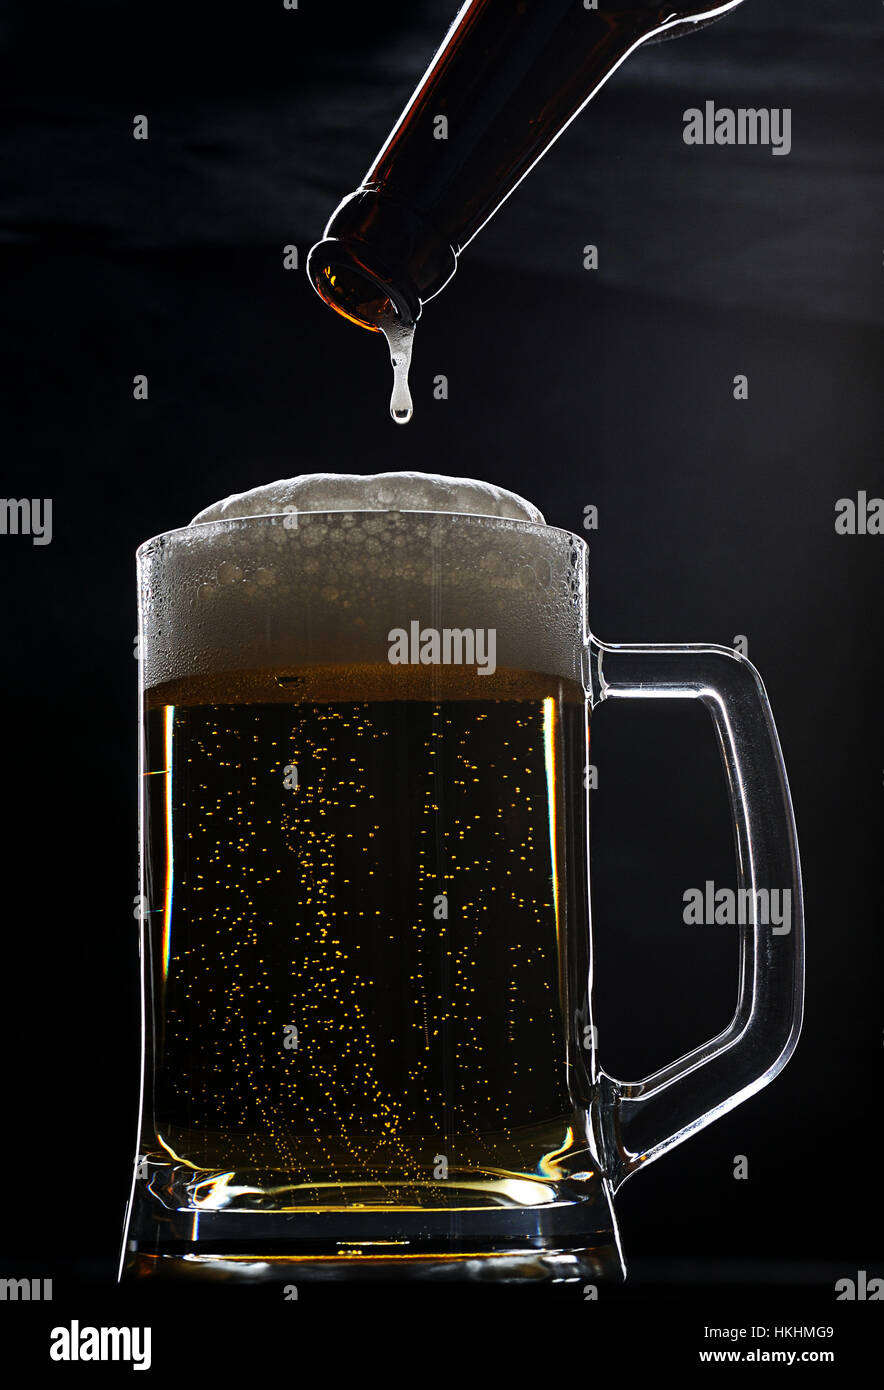 https://c8.alamy.com/comp/HKHMG9/last-drop-fall-in-full-beer-glass-from-bottle-HKHMG9.jpg